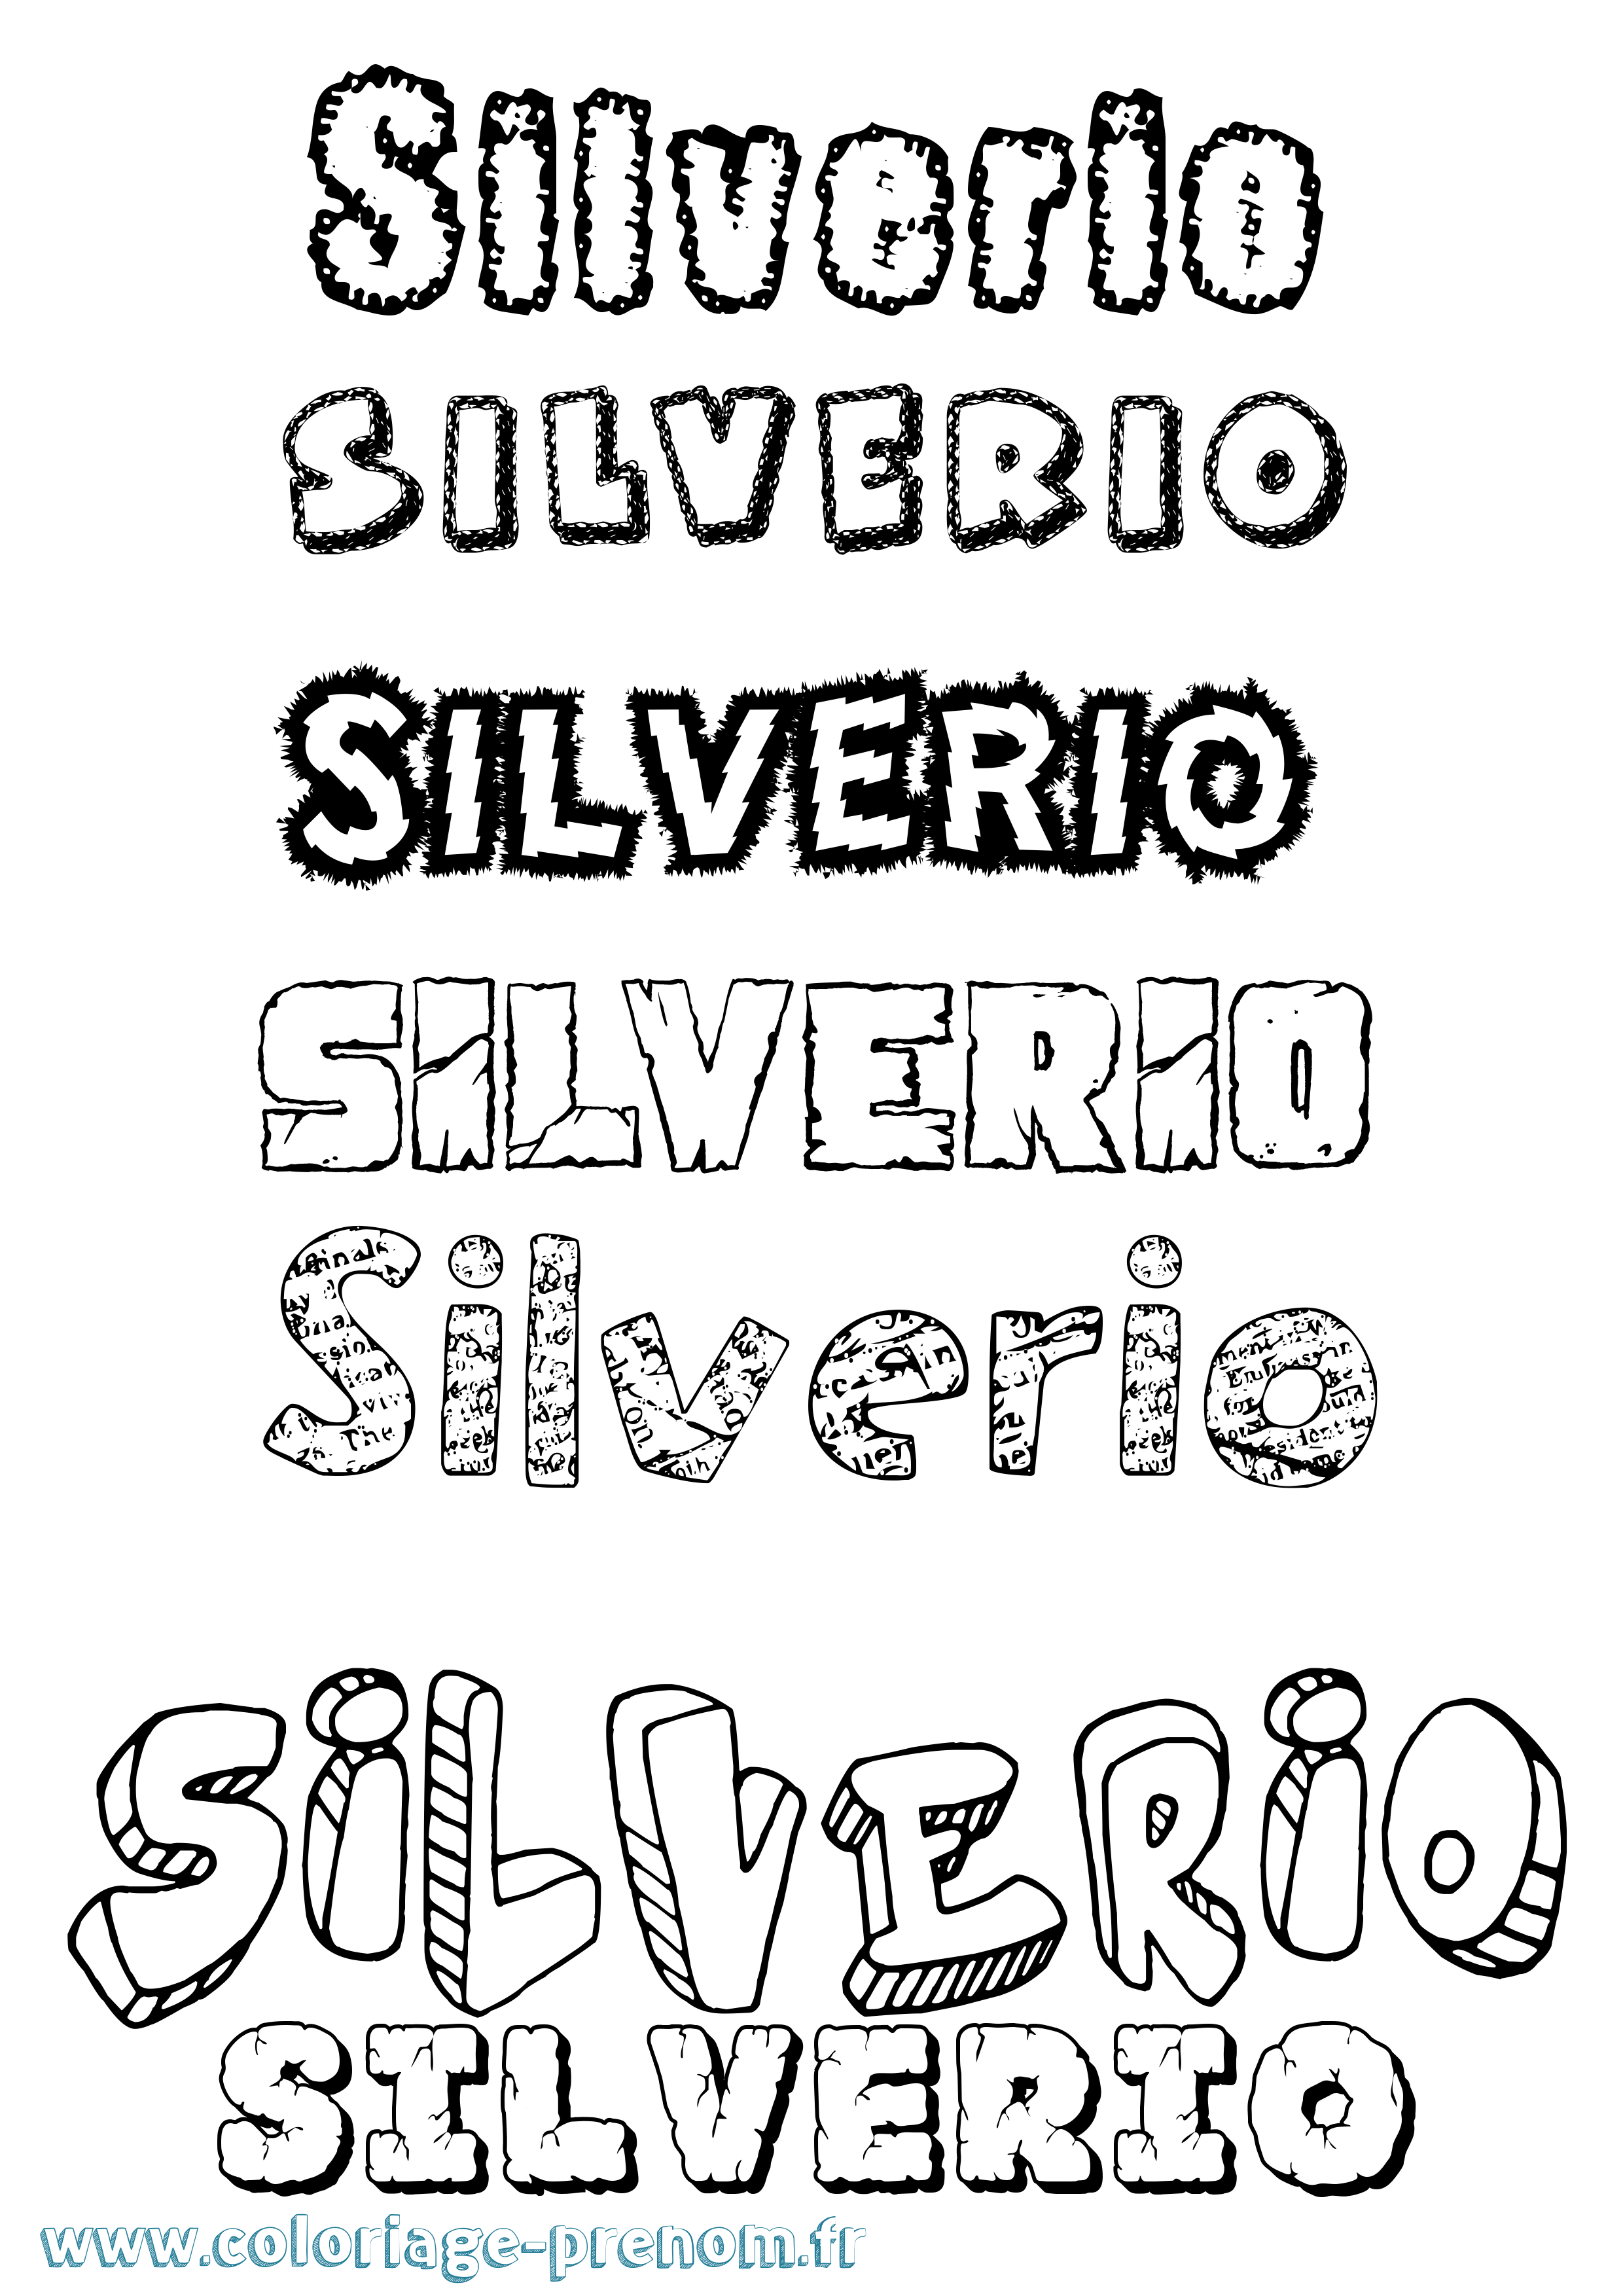 Coloriage prénom Silverio Destructuré